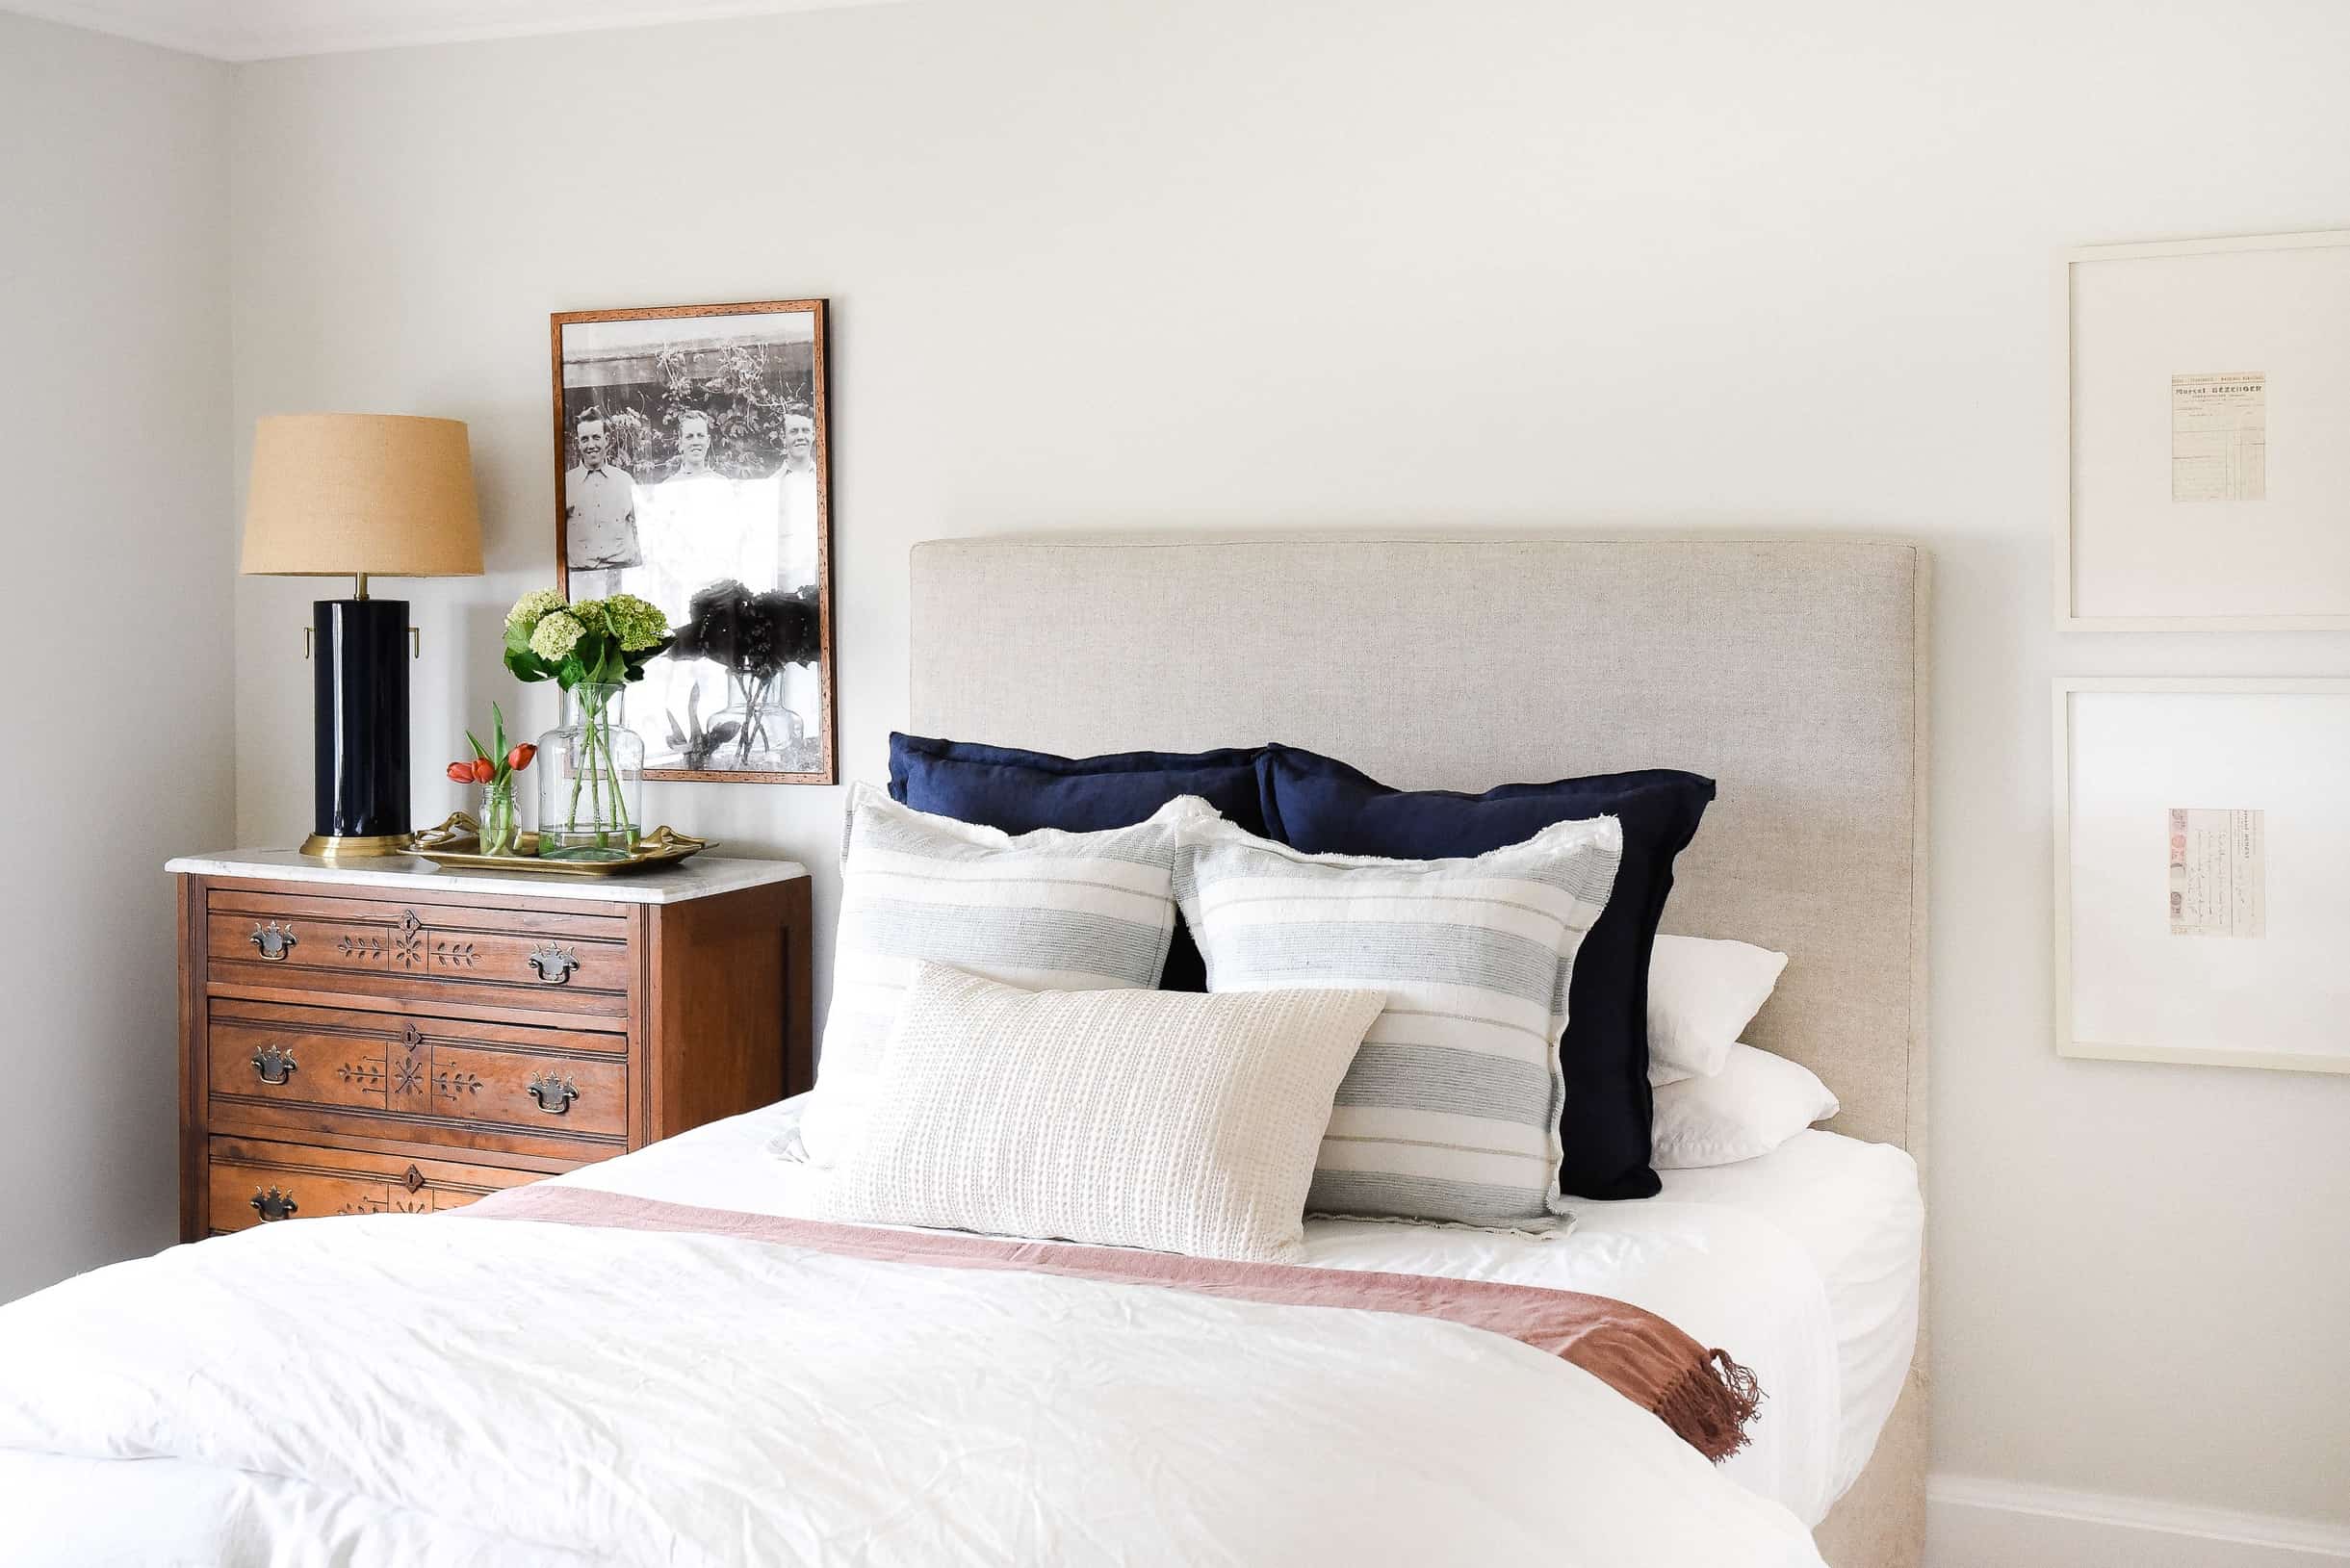 Create a farmhouse bedroom with a mix of antique farmhouse furniture and modern farmhouse decor! 